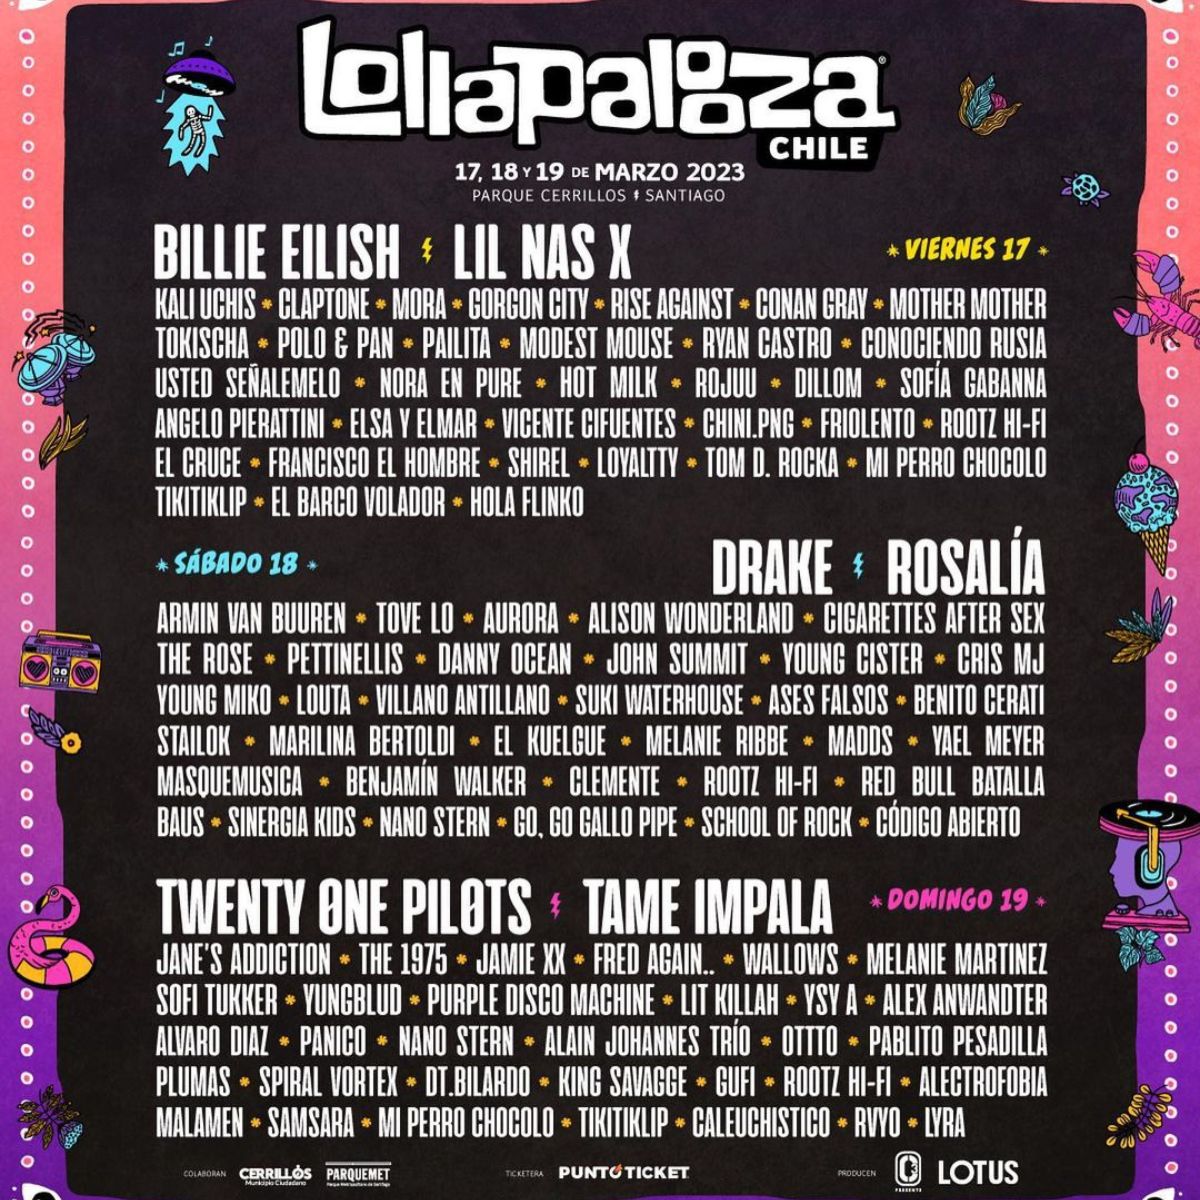 Nuevo Artista Lollapalooza 2023 (3)